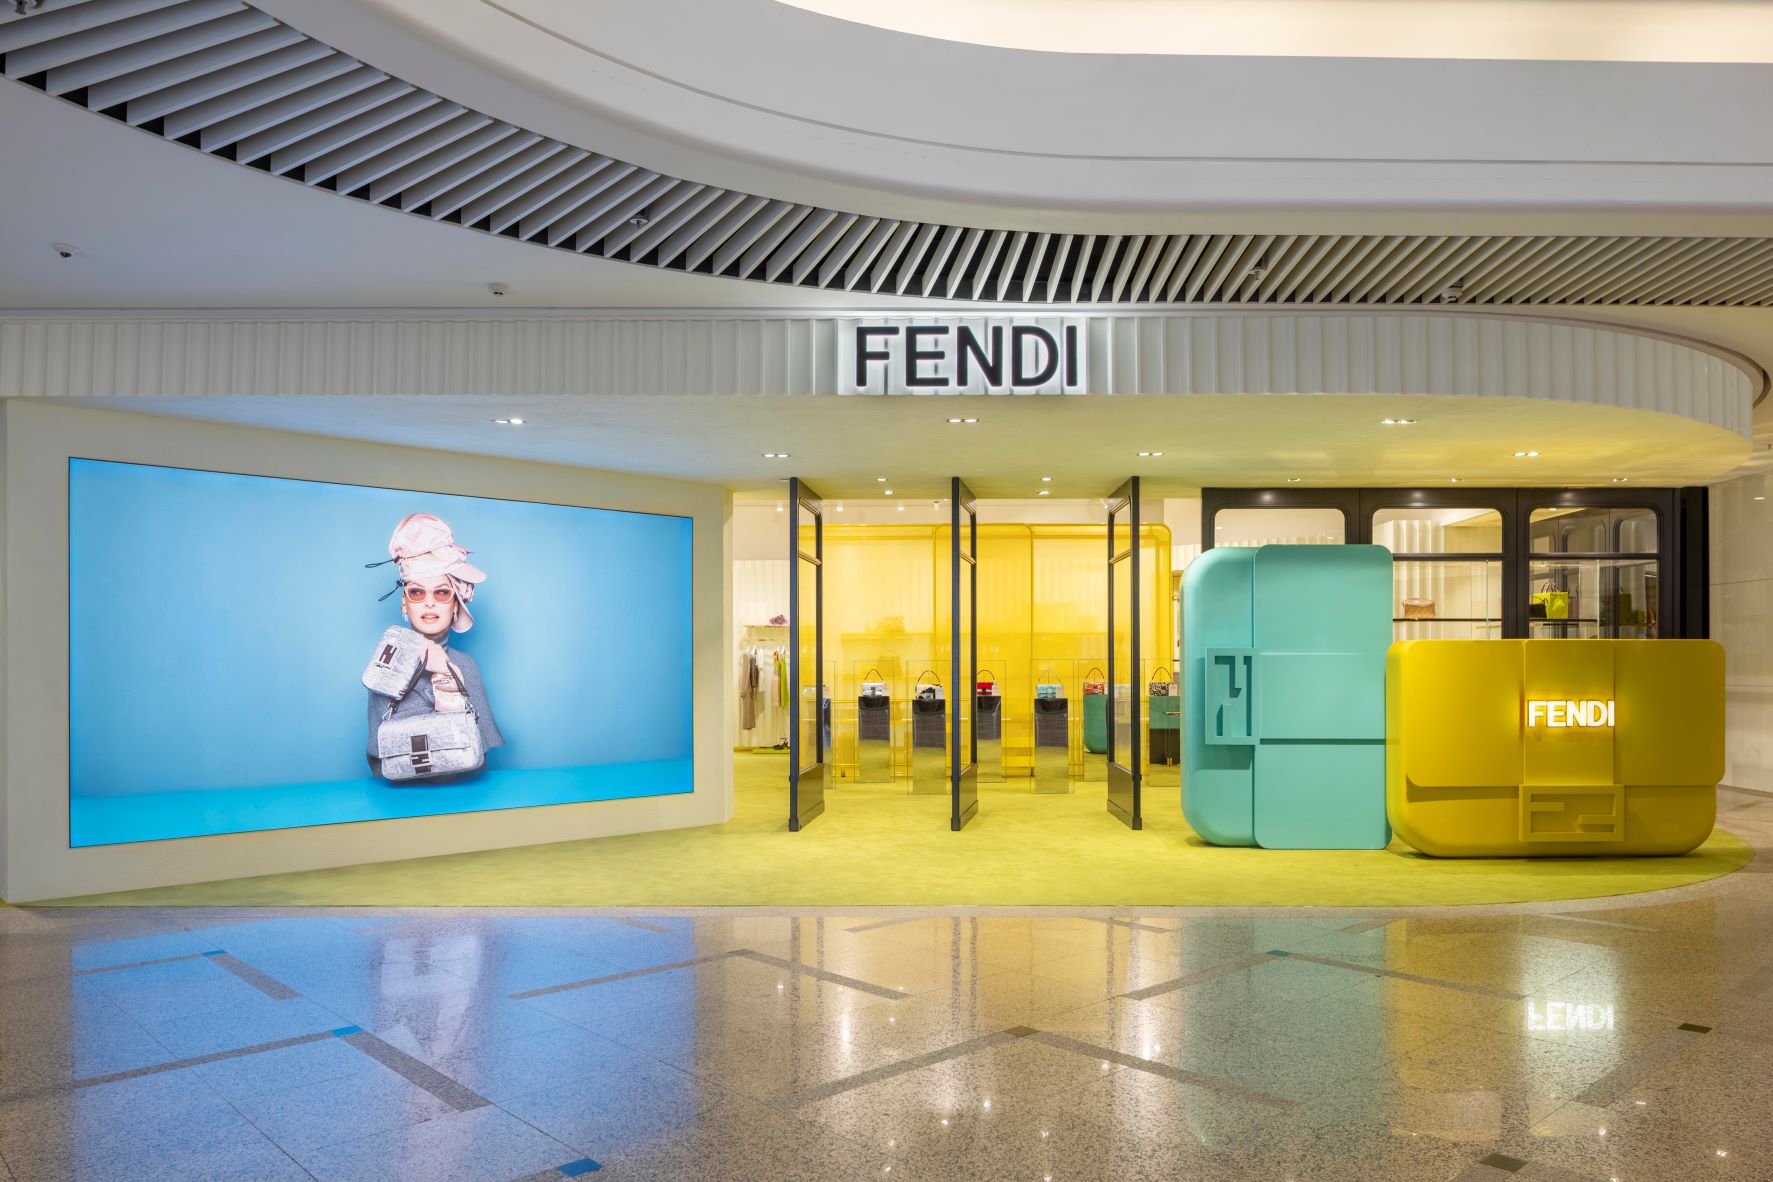 Fendi Marketing | The Brand Hopper